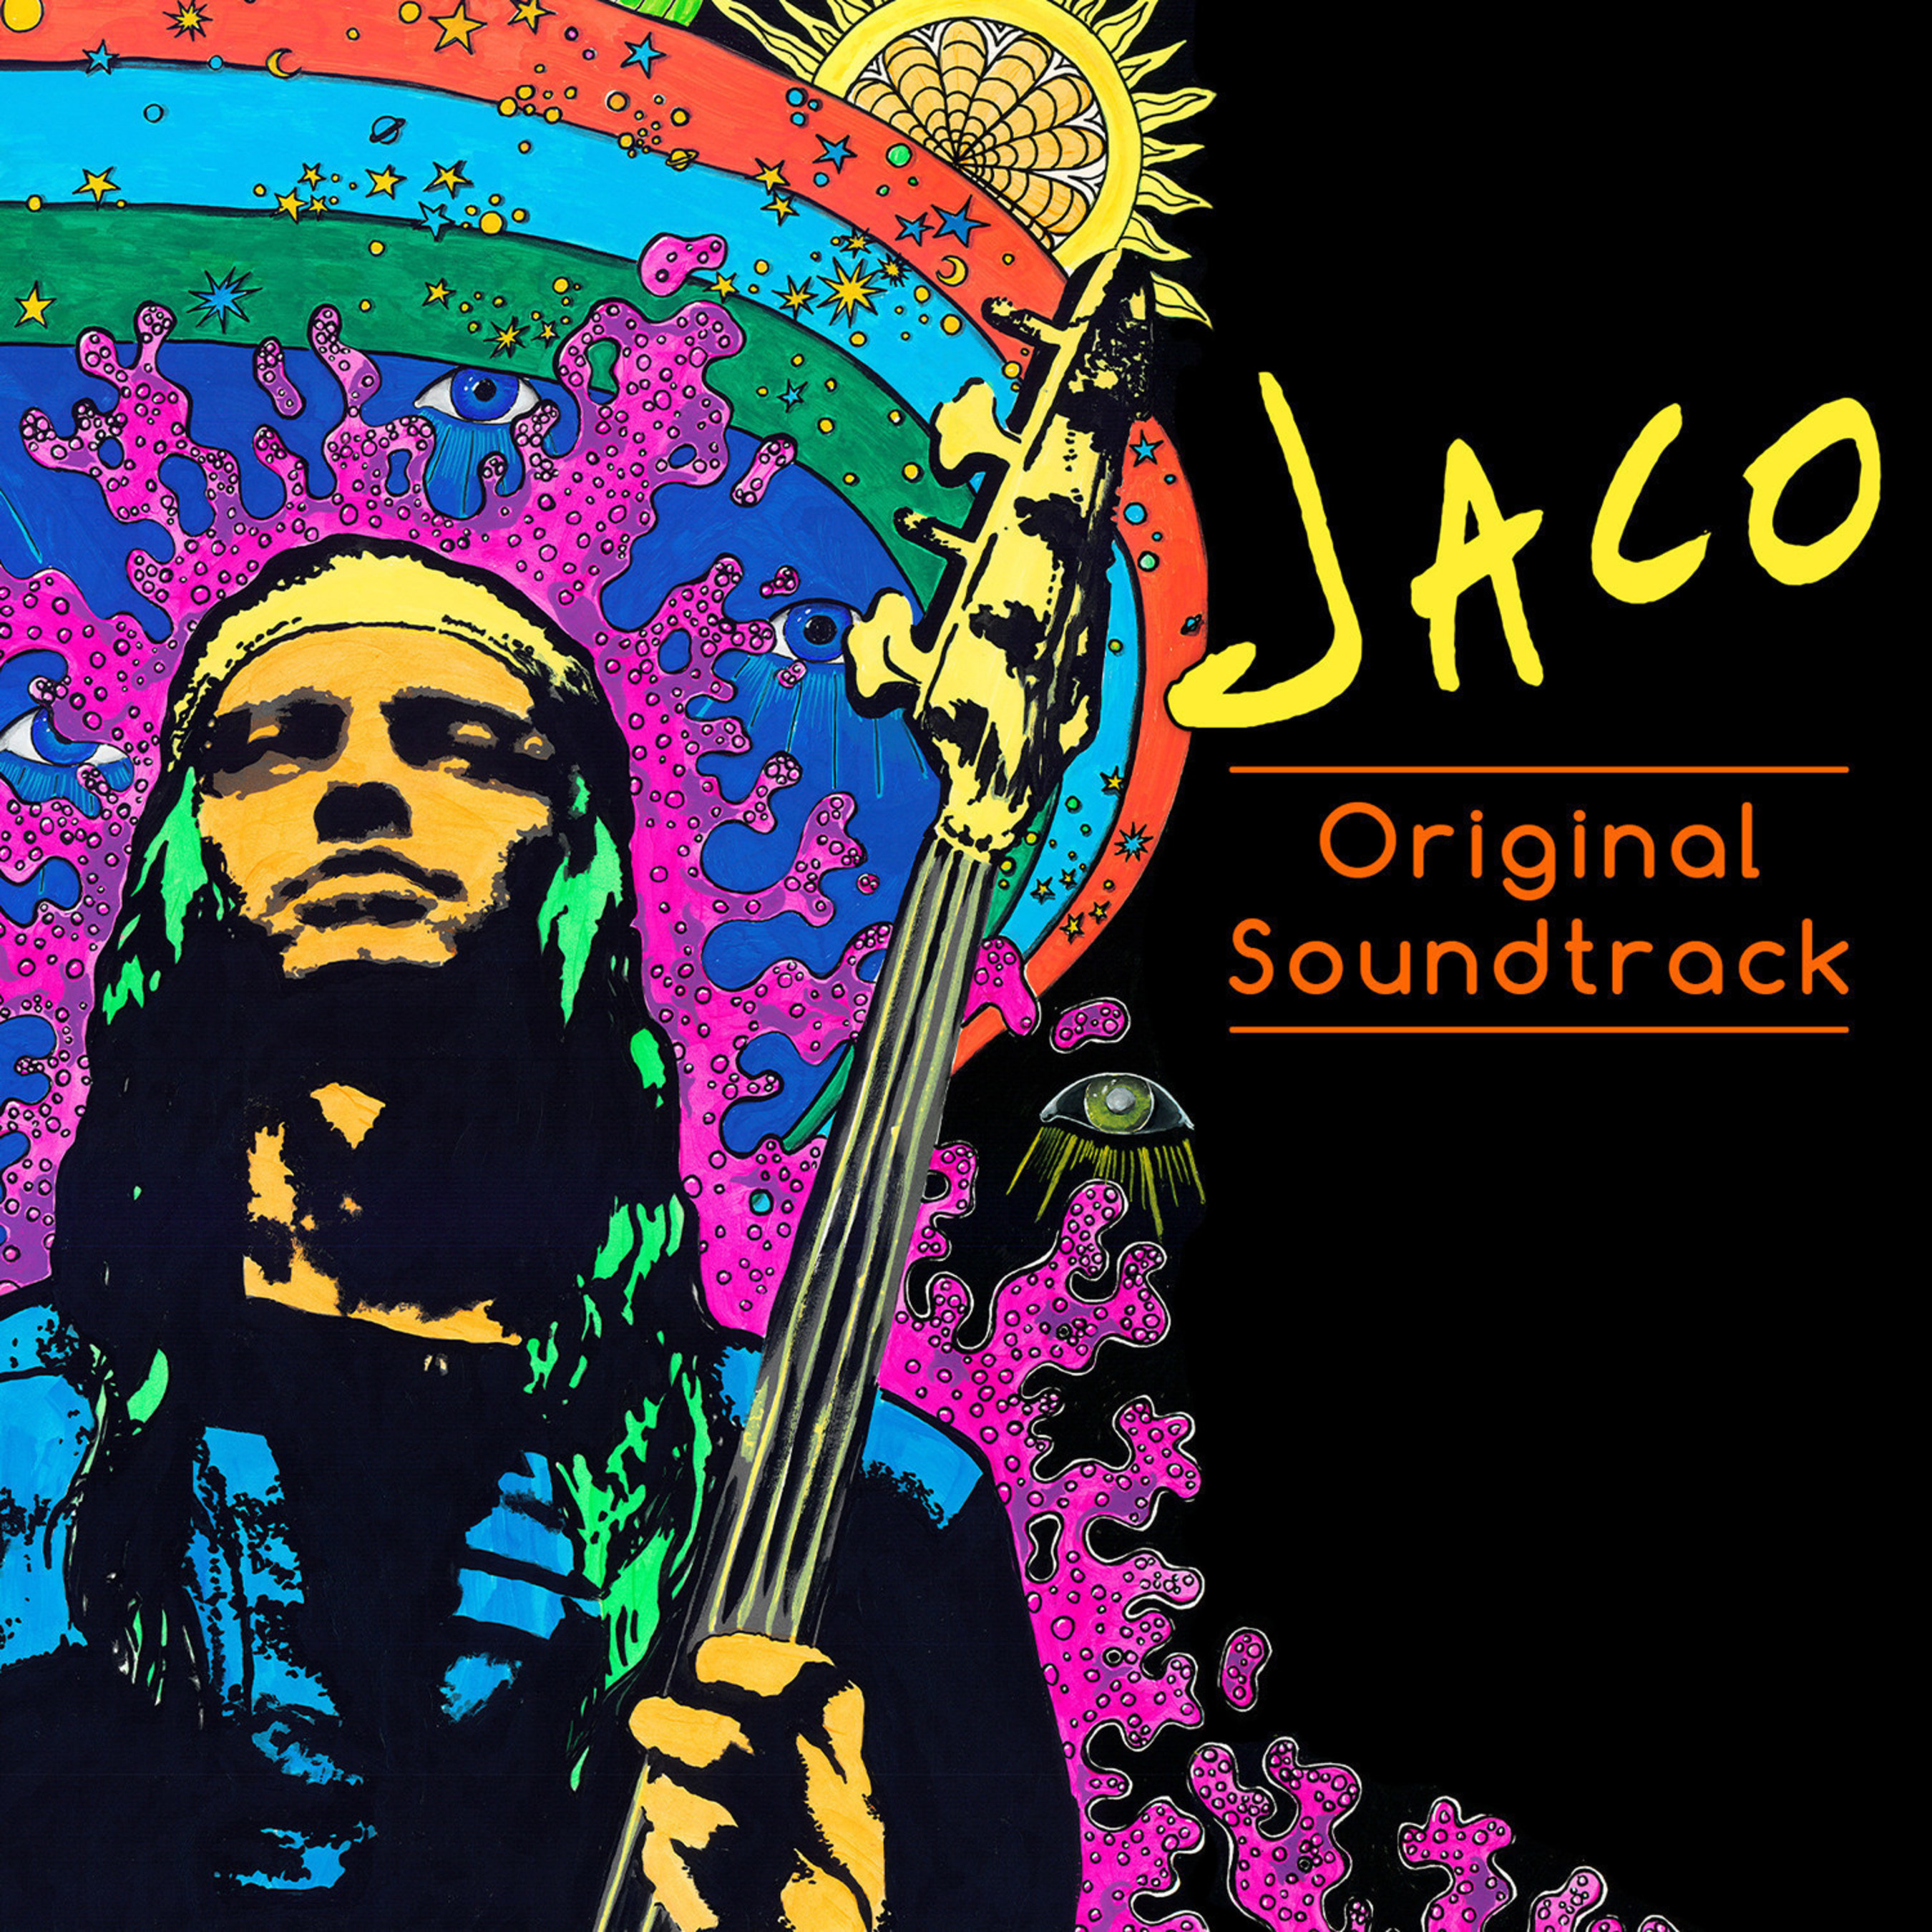 "JACO: Original Soundtrack" out Friday, November 27, 2015